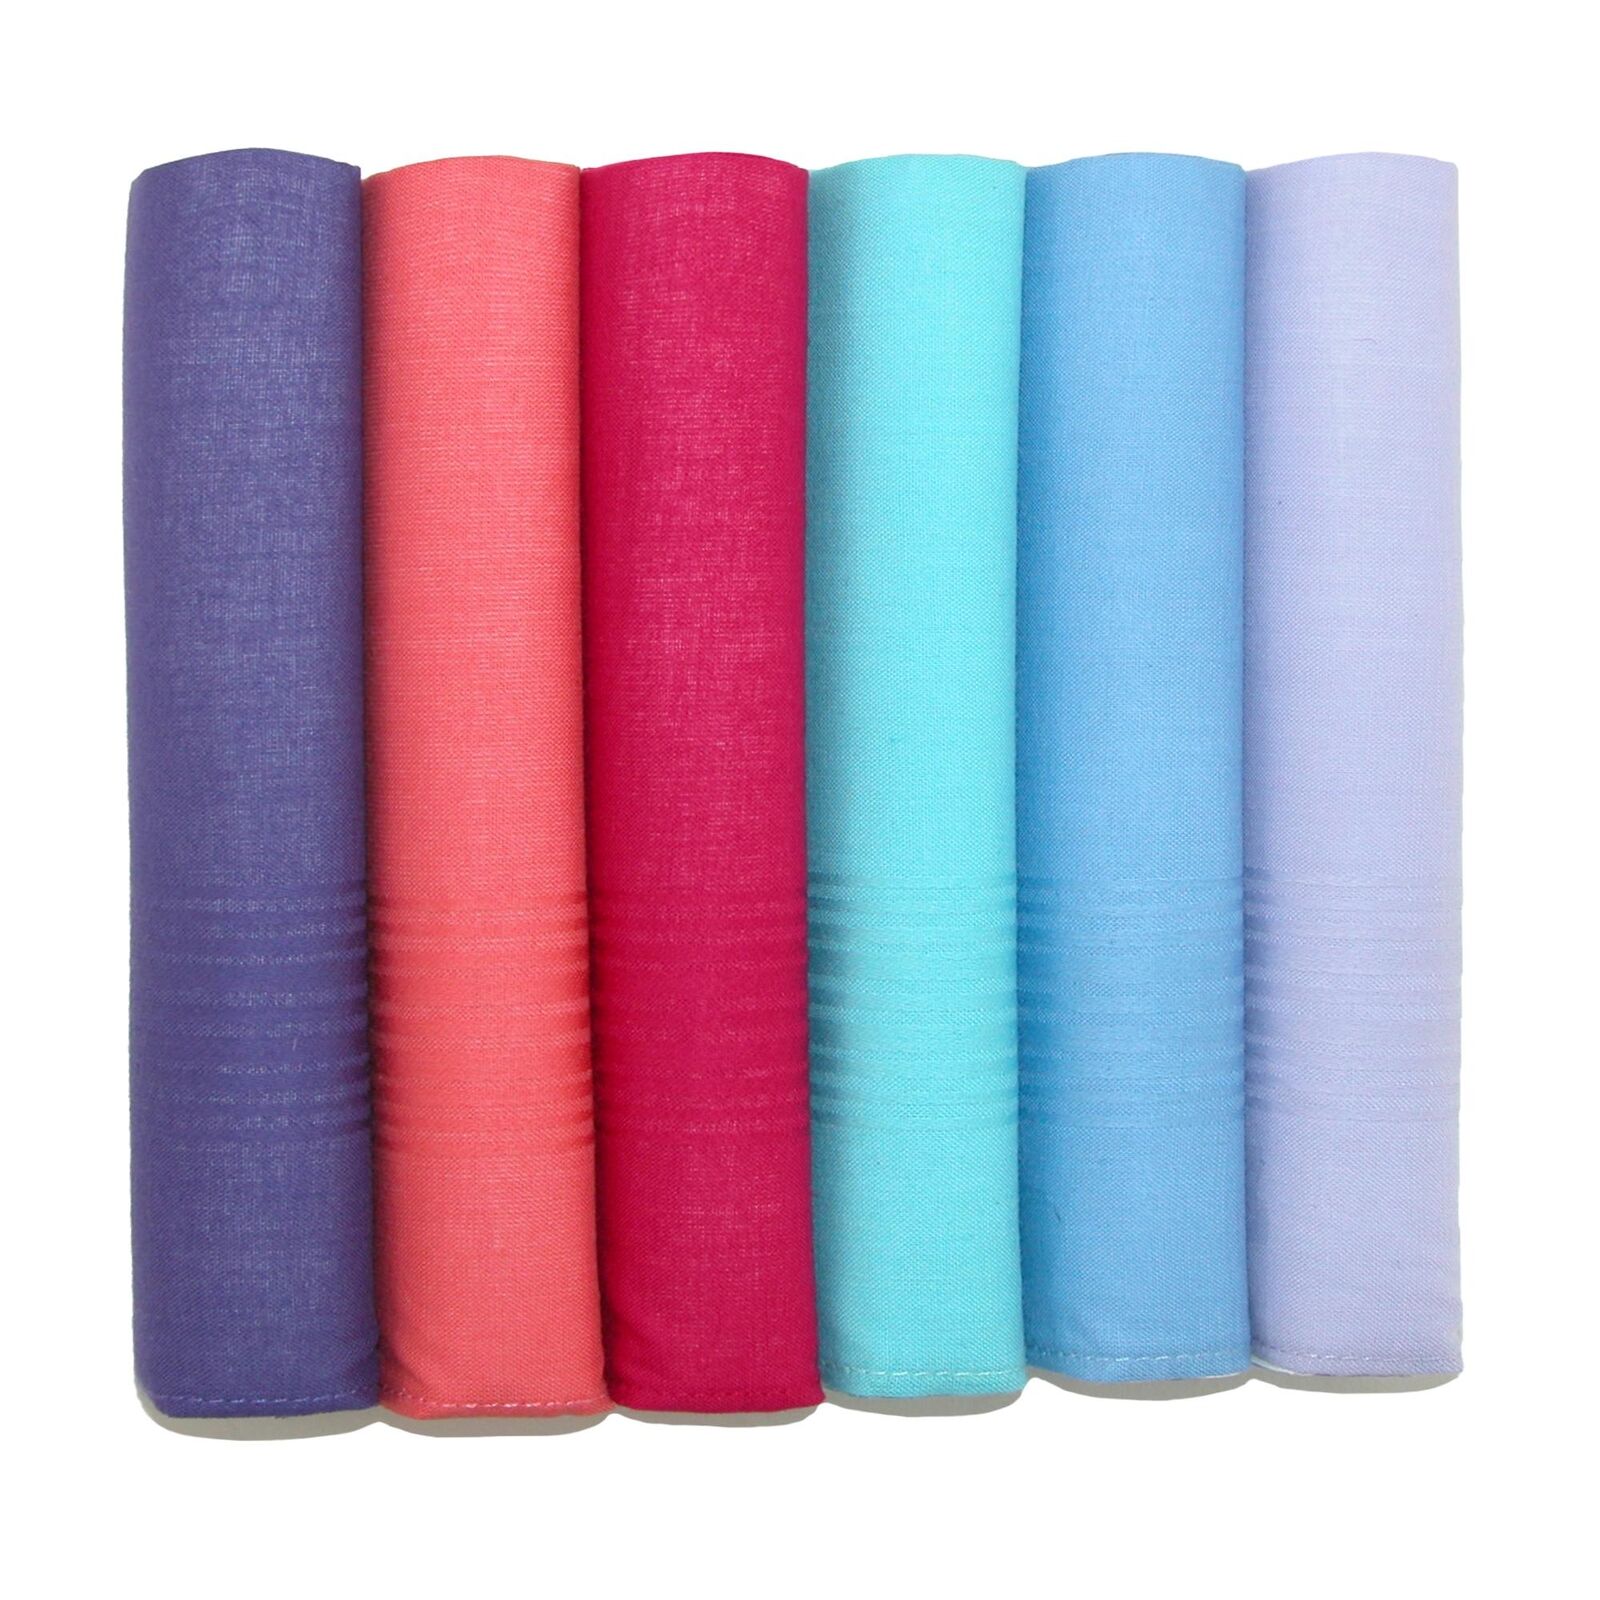 New Selini Women\'s Cotton Bright Multi-Color Dress Handkerchief Set (Pack of 6)